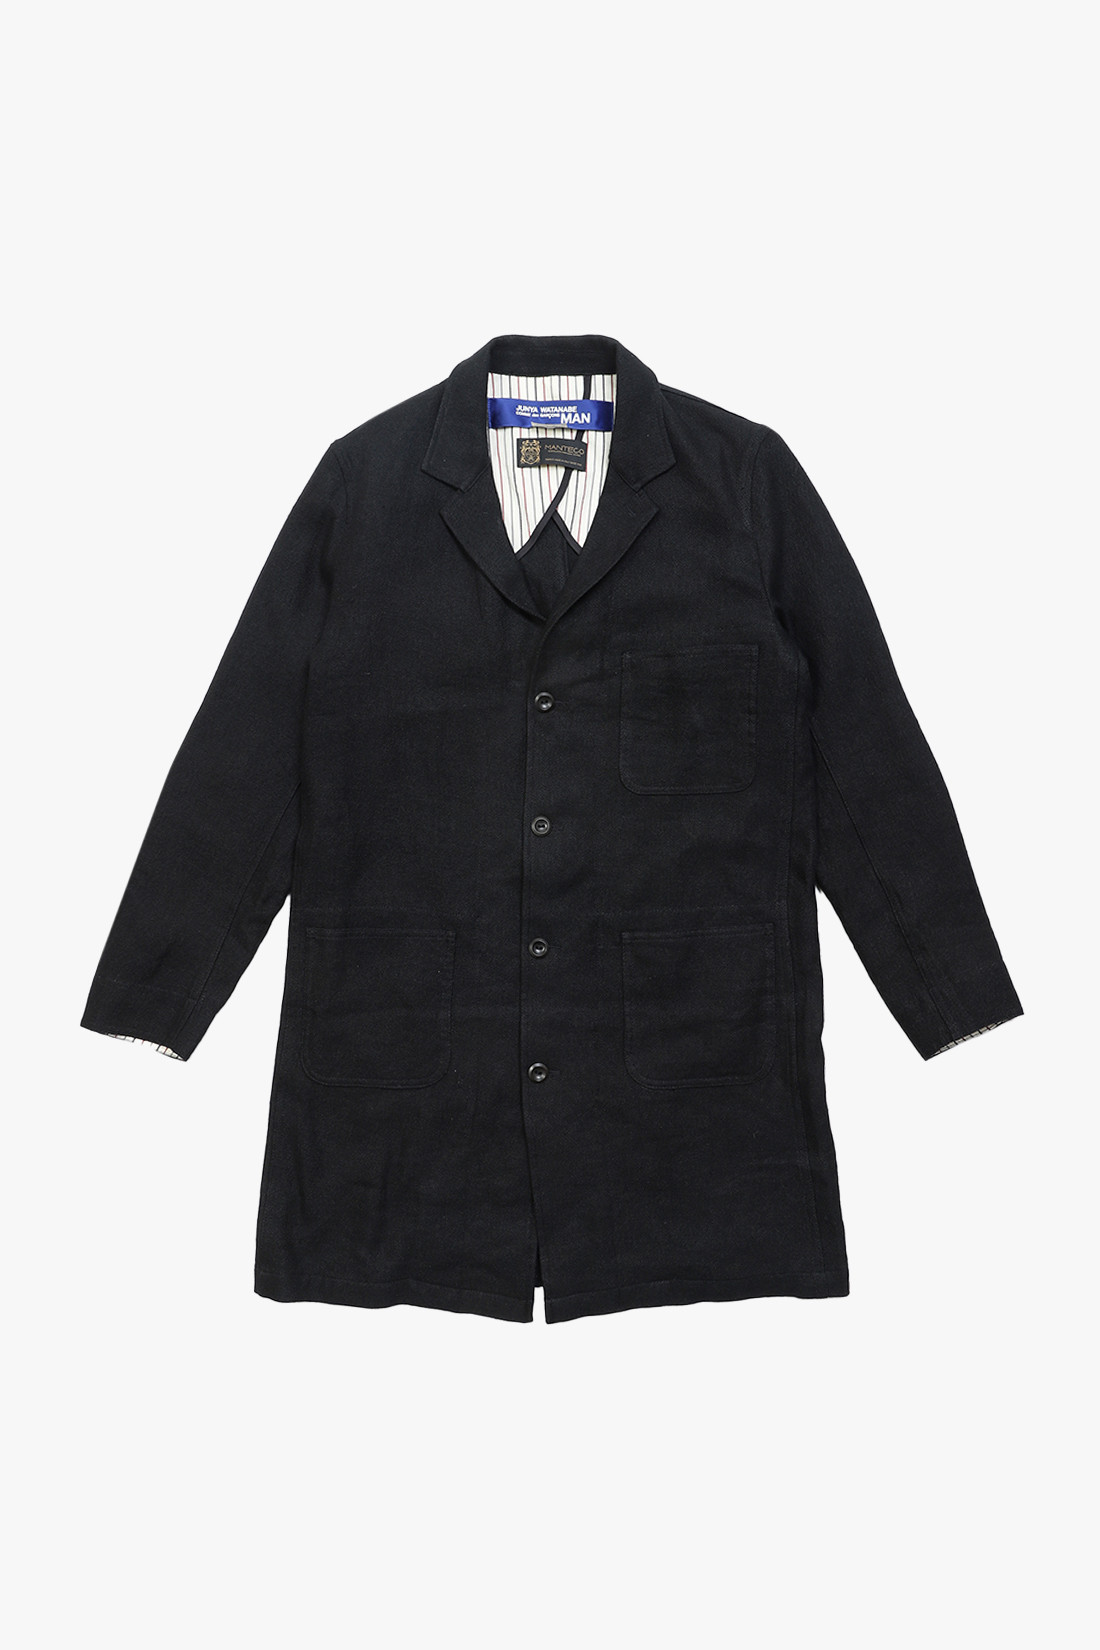 Wf-c401-w20 wool linen coat Black